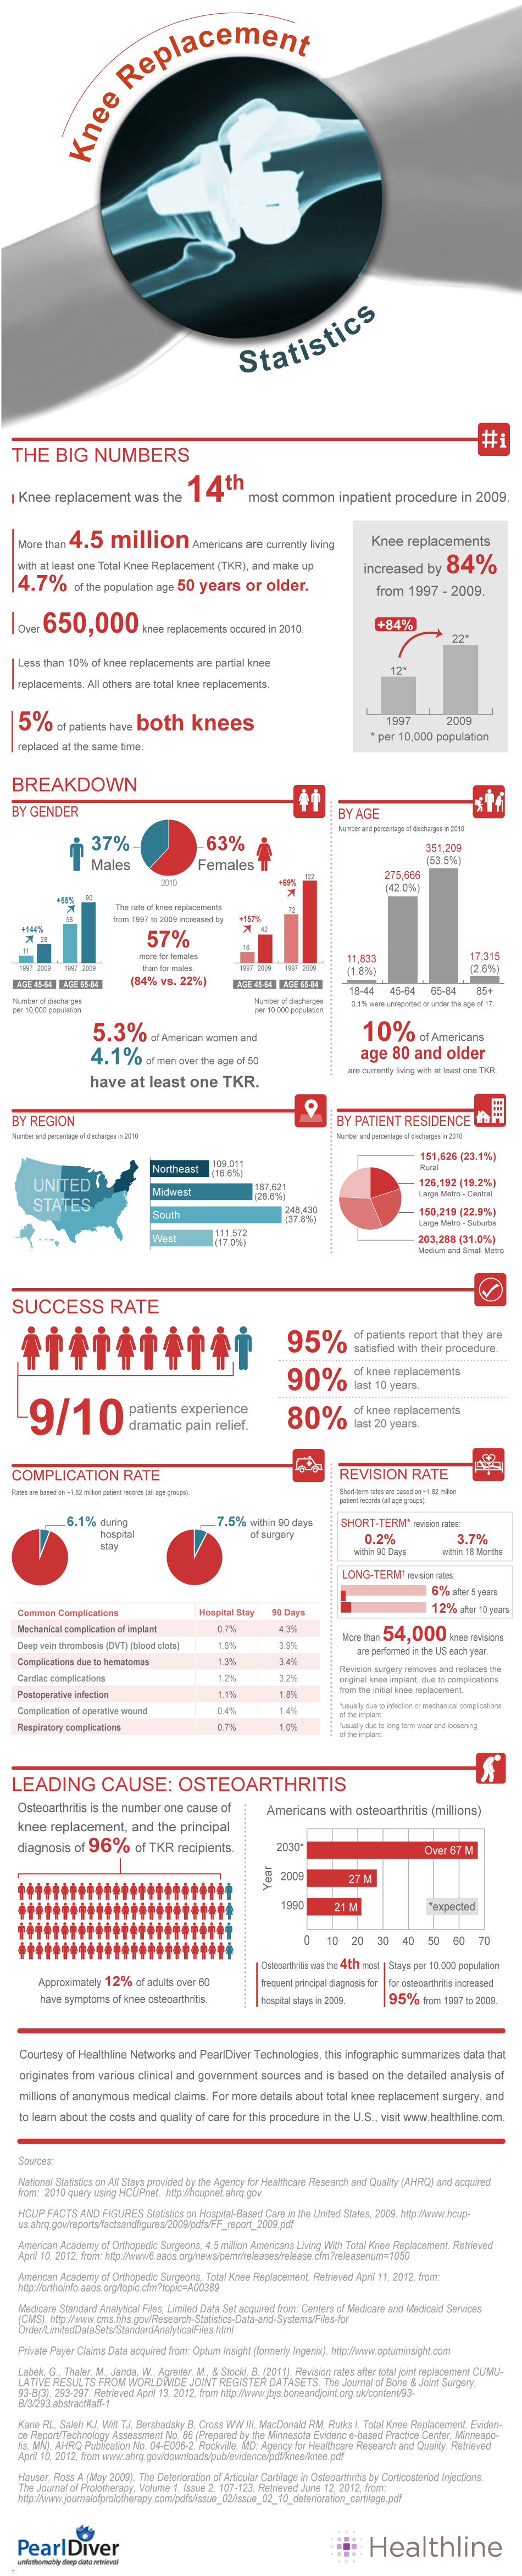 Knee Replacement Statistics Infographic